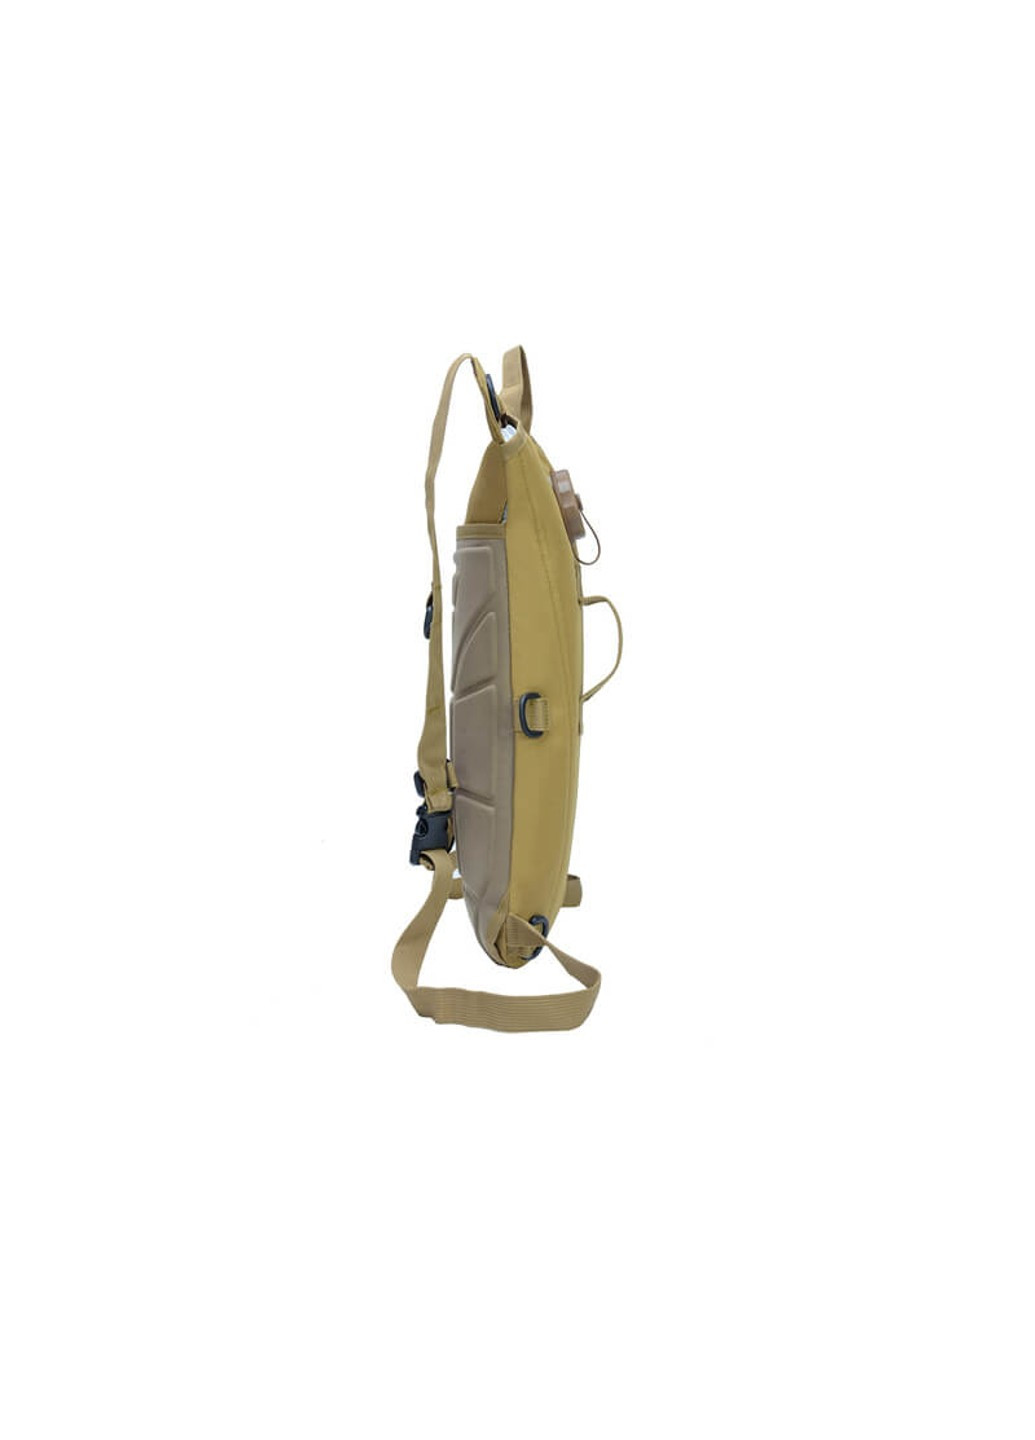 Питна система (гідратор тактичний) Hydration bag Tactical 3 ST-018 army green Smartex (258997782)